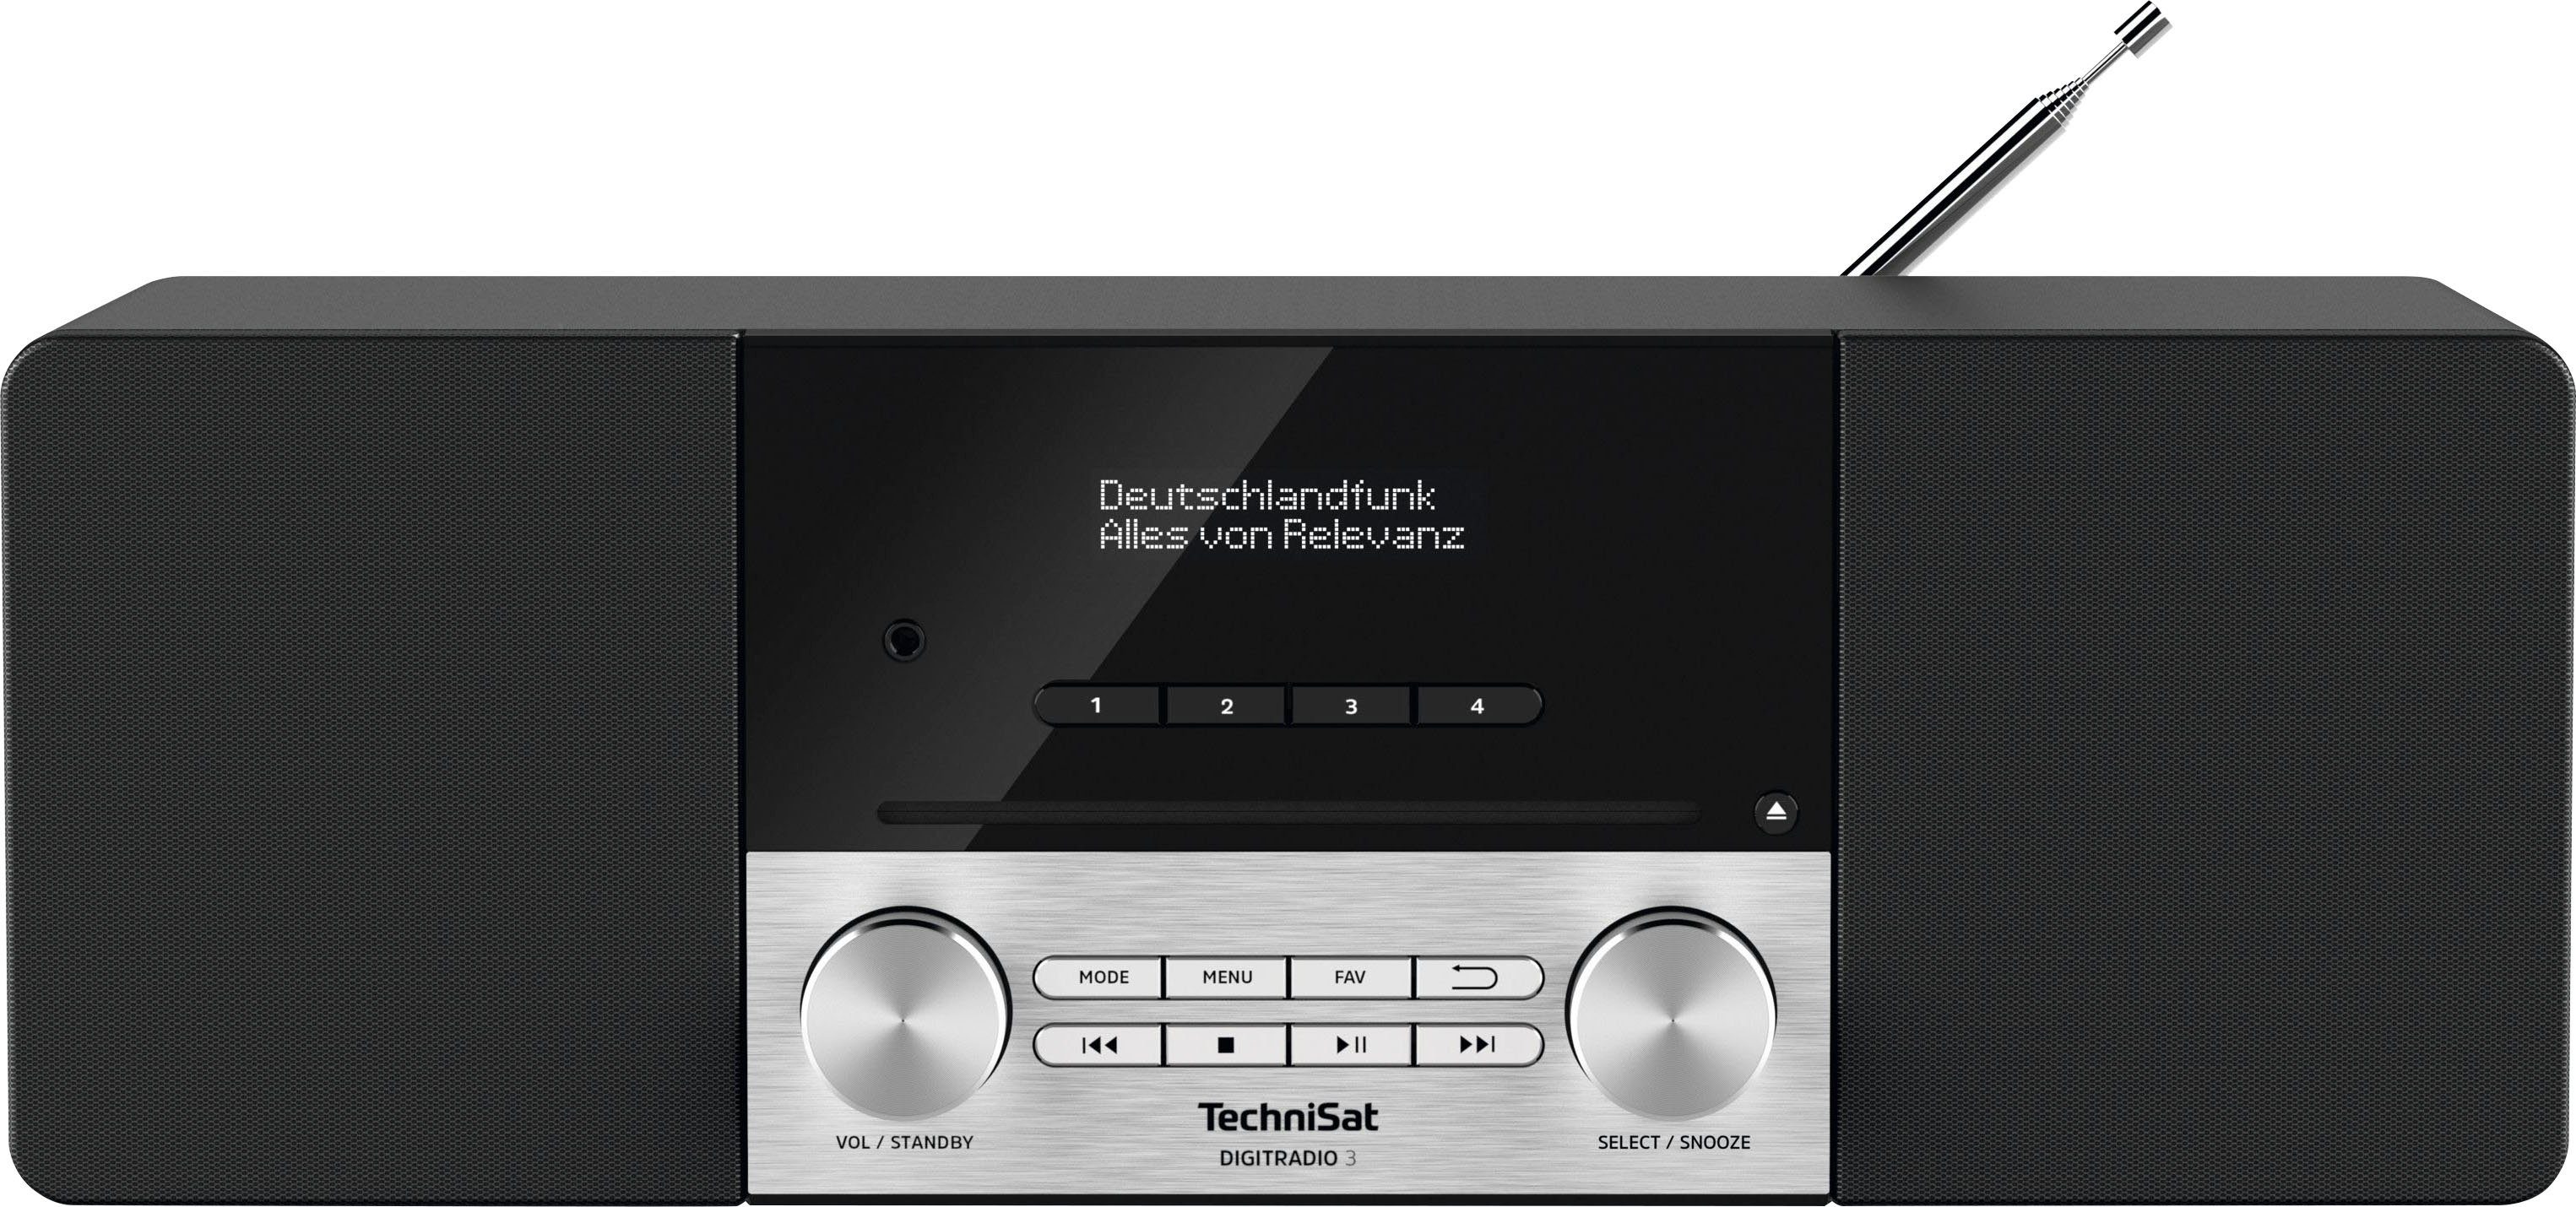 CD-Player, (DAB) 3 UKW TechniSat RDS, 20 Digitalradio in Germany) (Digitalradio DIGITRADIO (DAB), schwarz mit W, Made